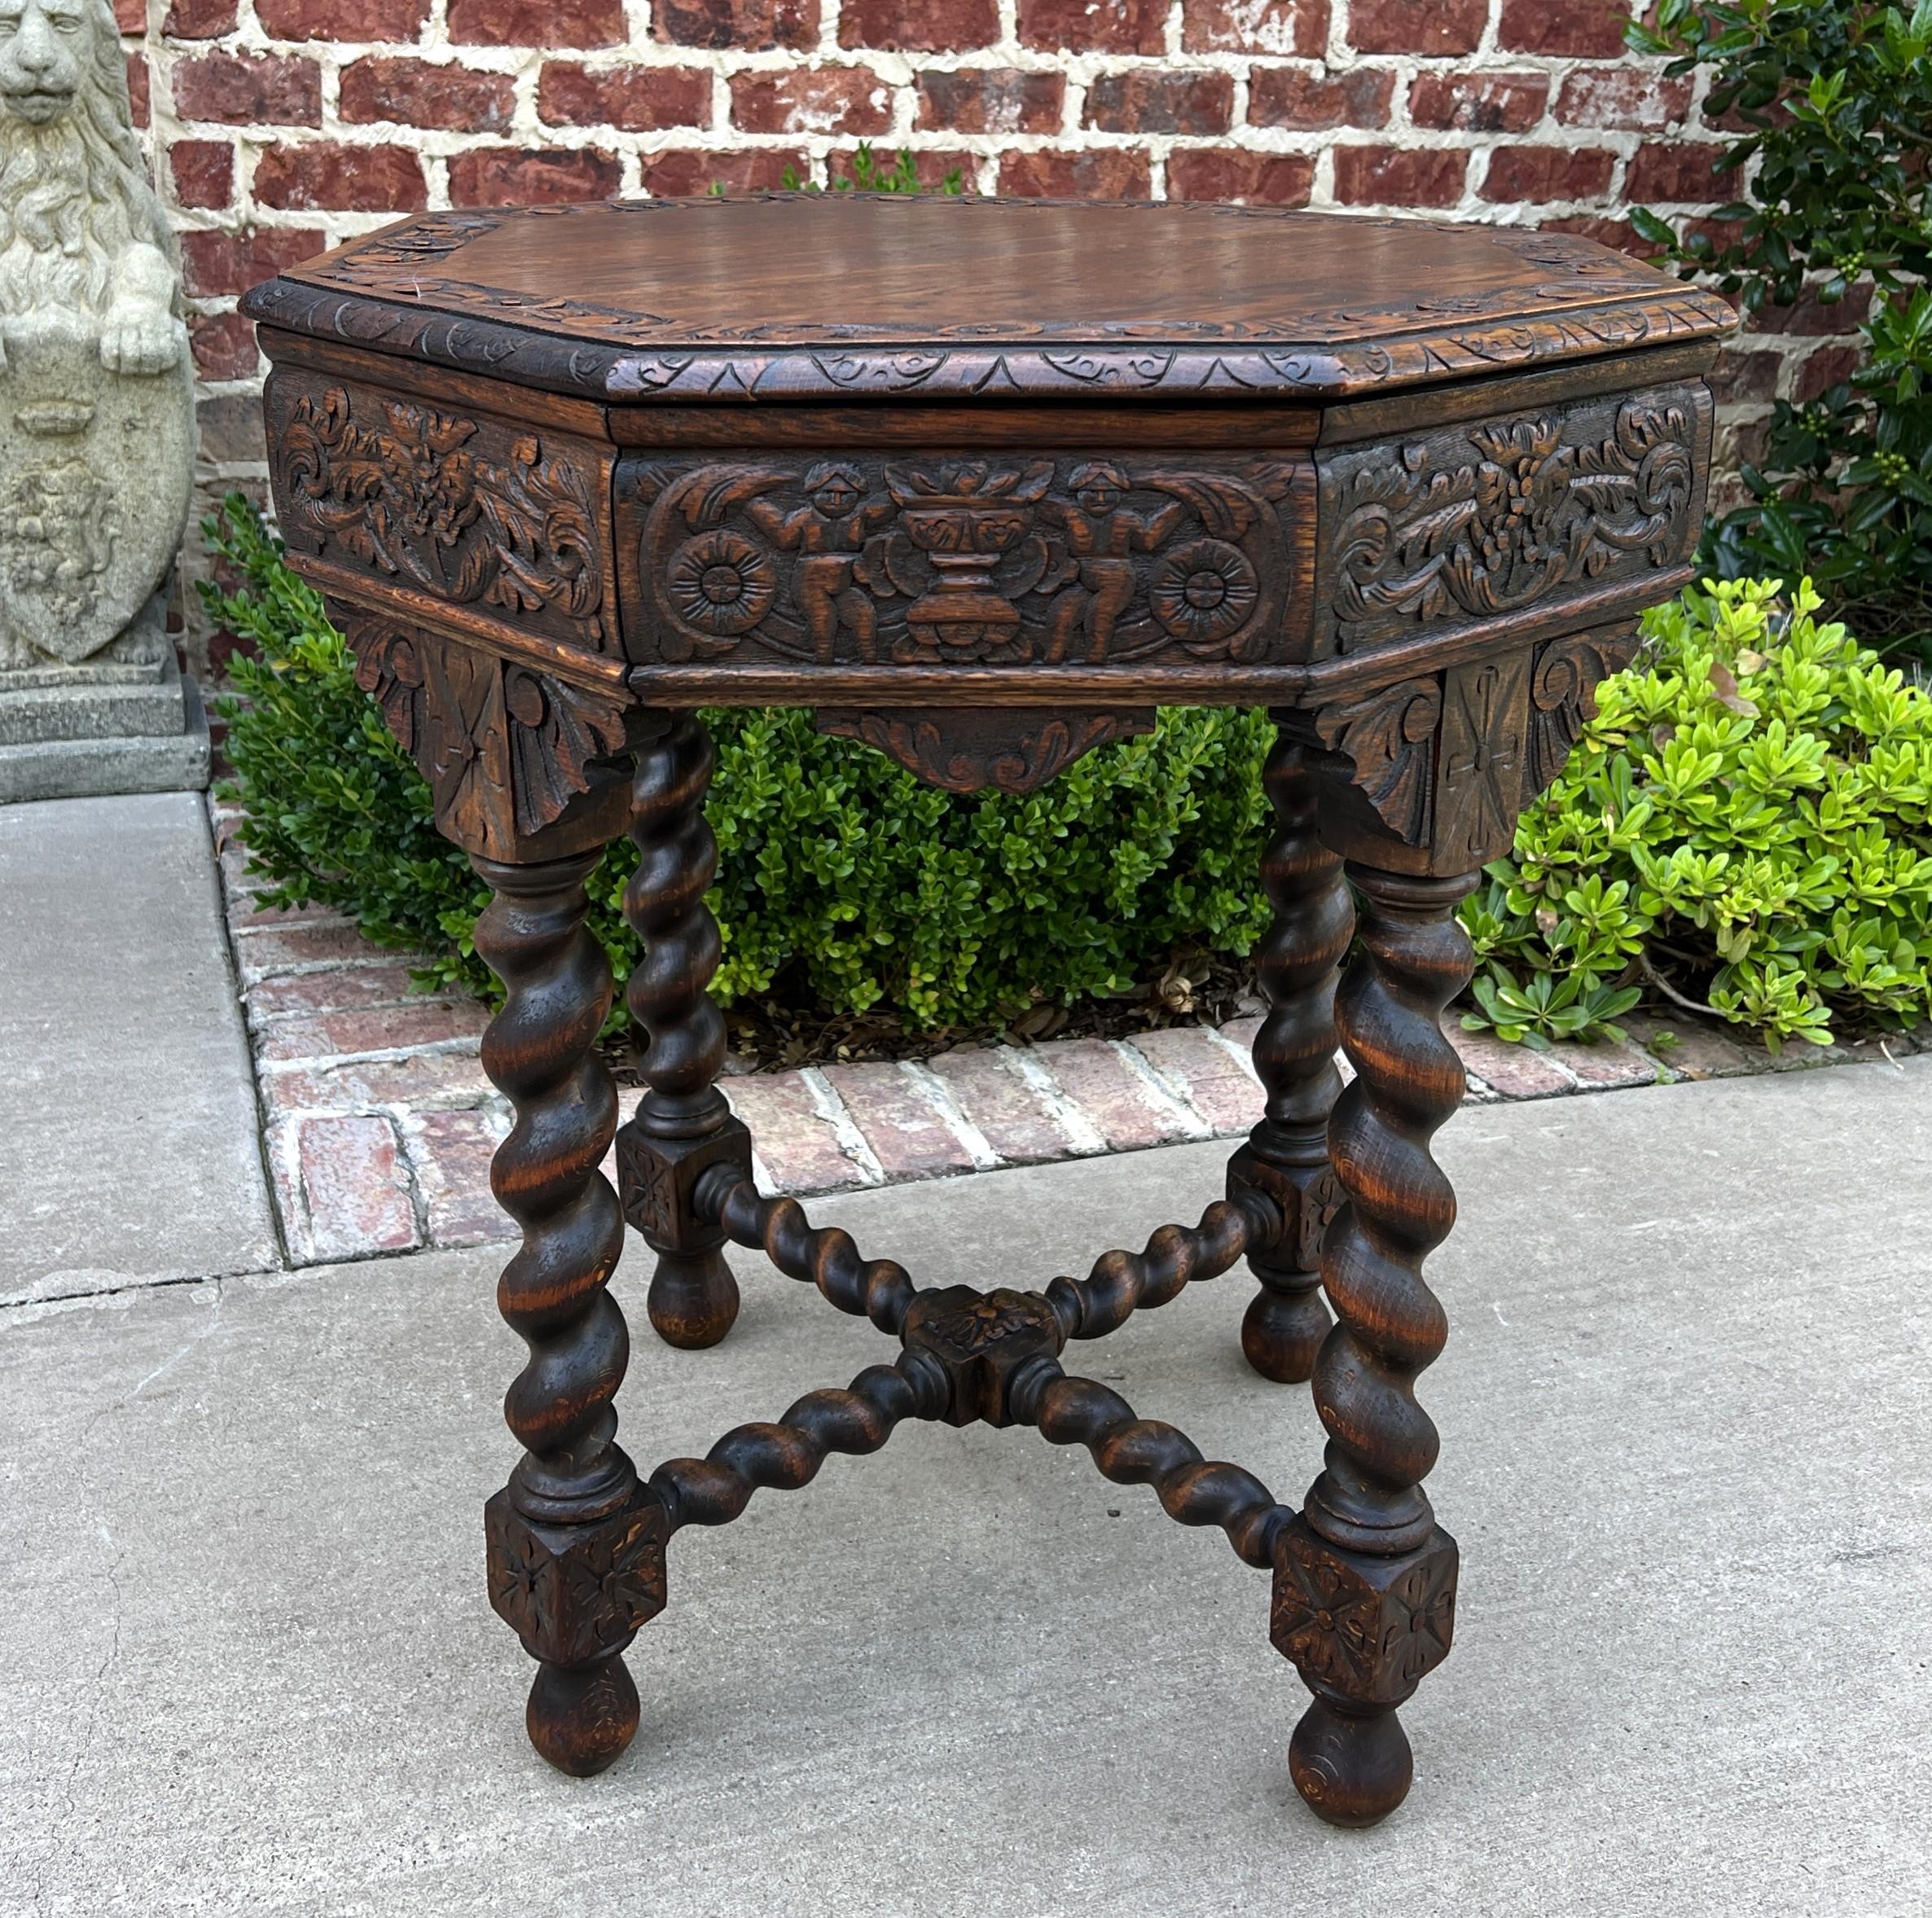 Antique French Table Barley Twist Octagonal Renaissance Revival Carved Oak 19thc For Sale 8